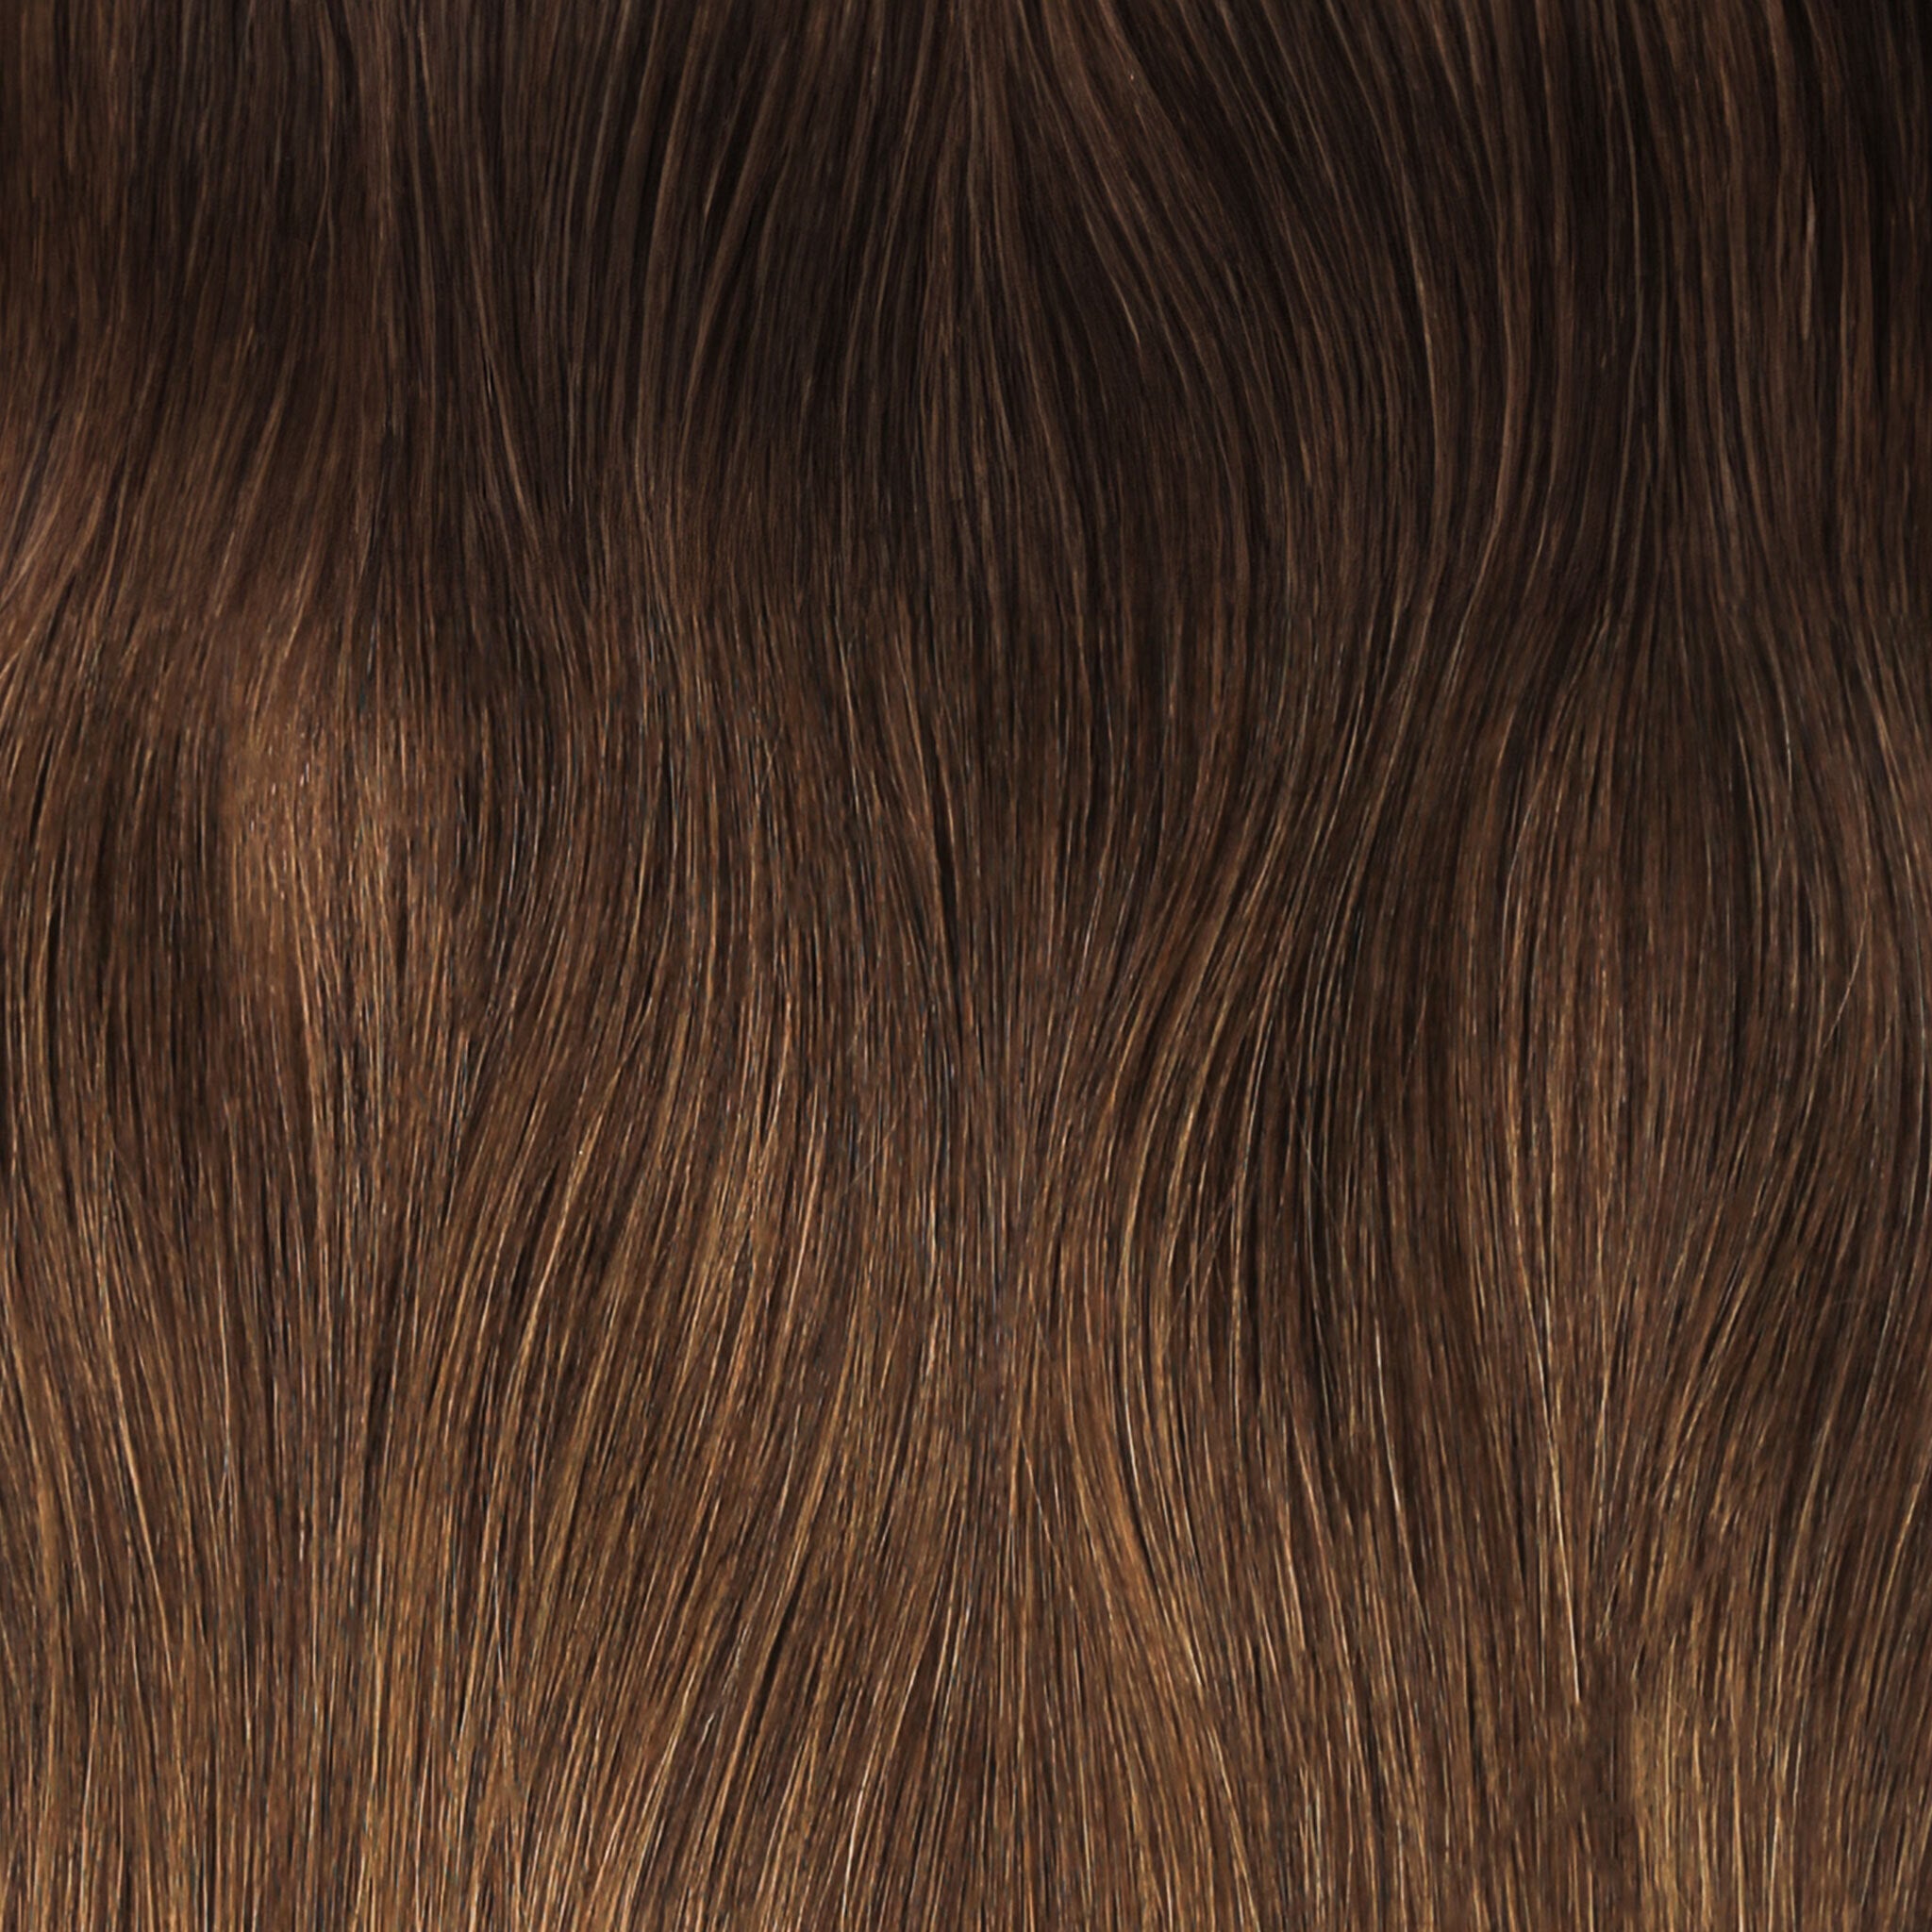 #4 Ponytail Hair Extension